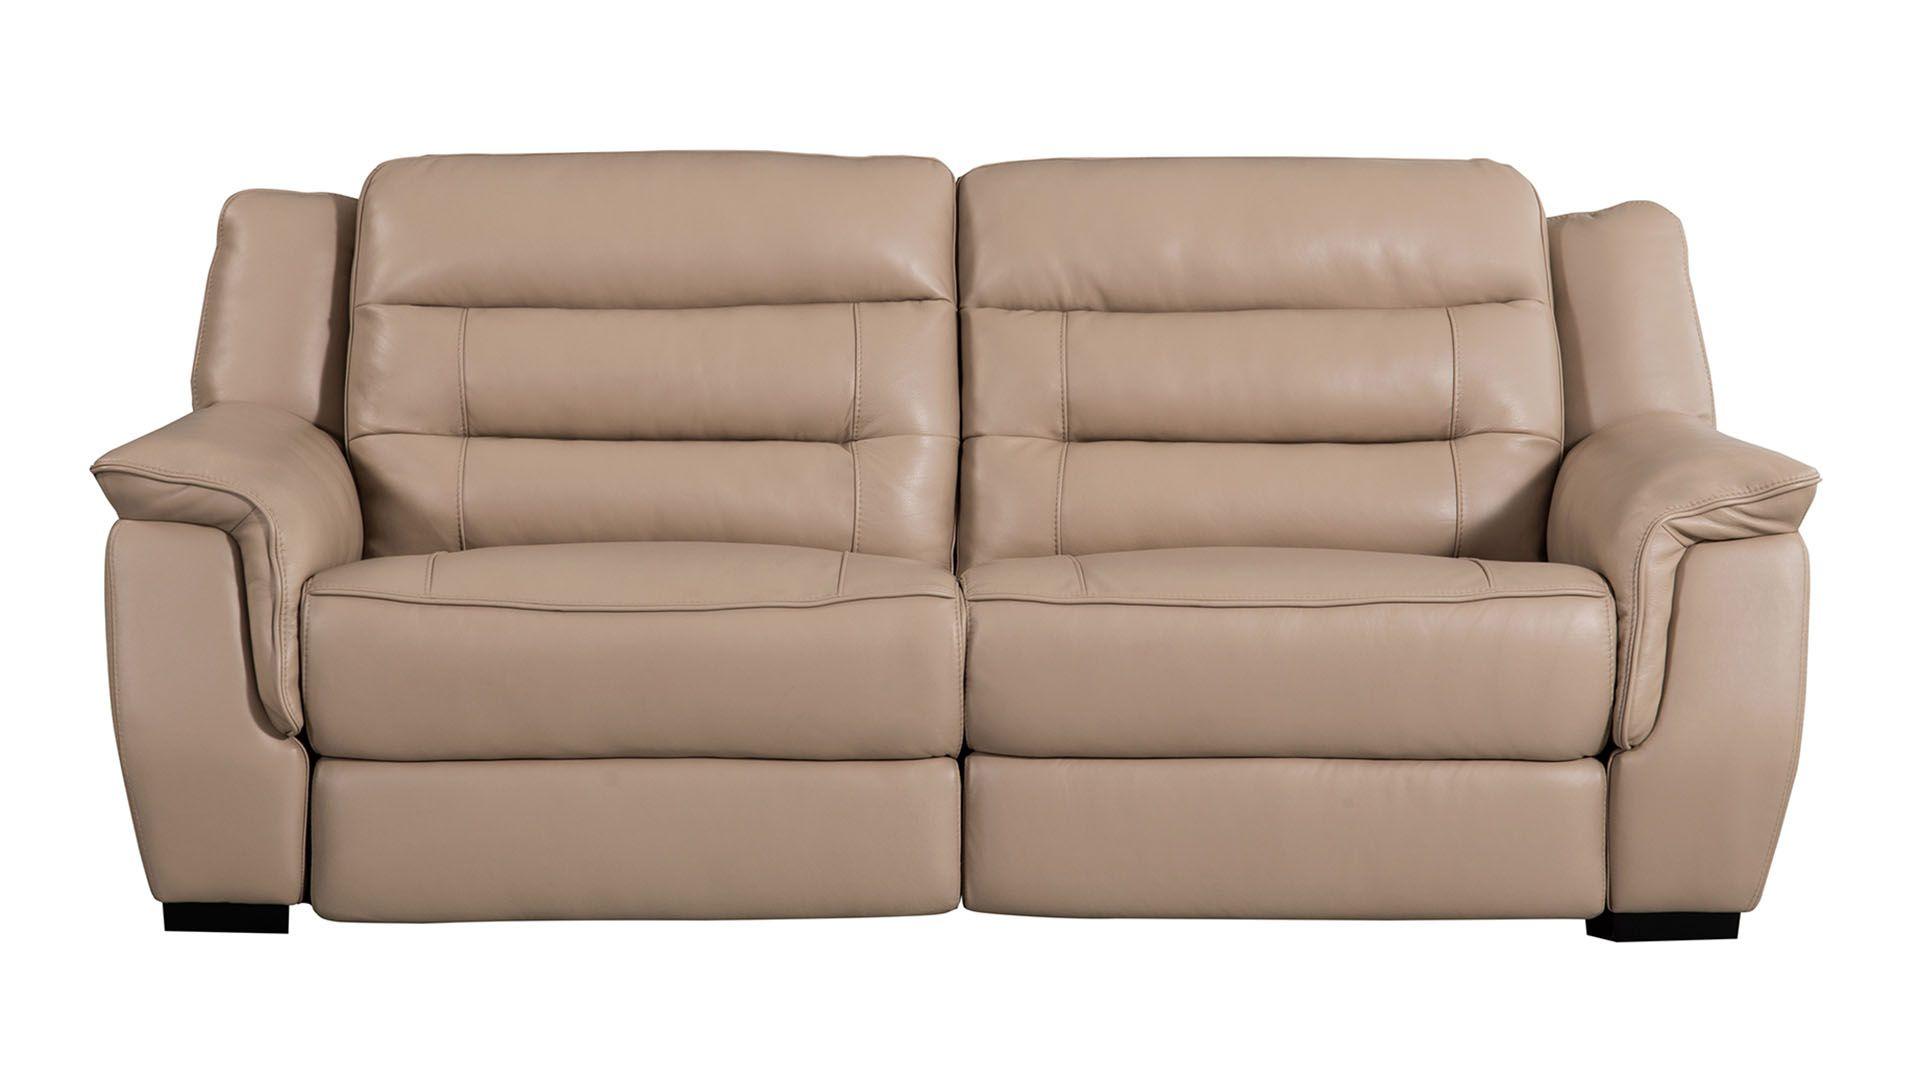 American Eagle Furniture EK089-TAN Reclining Sofa